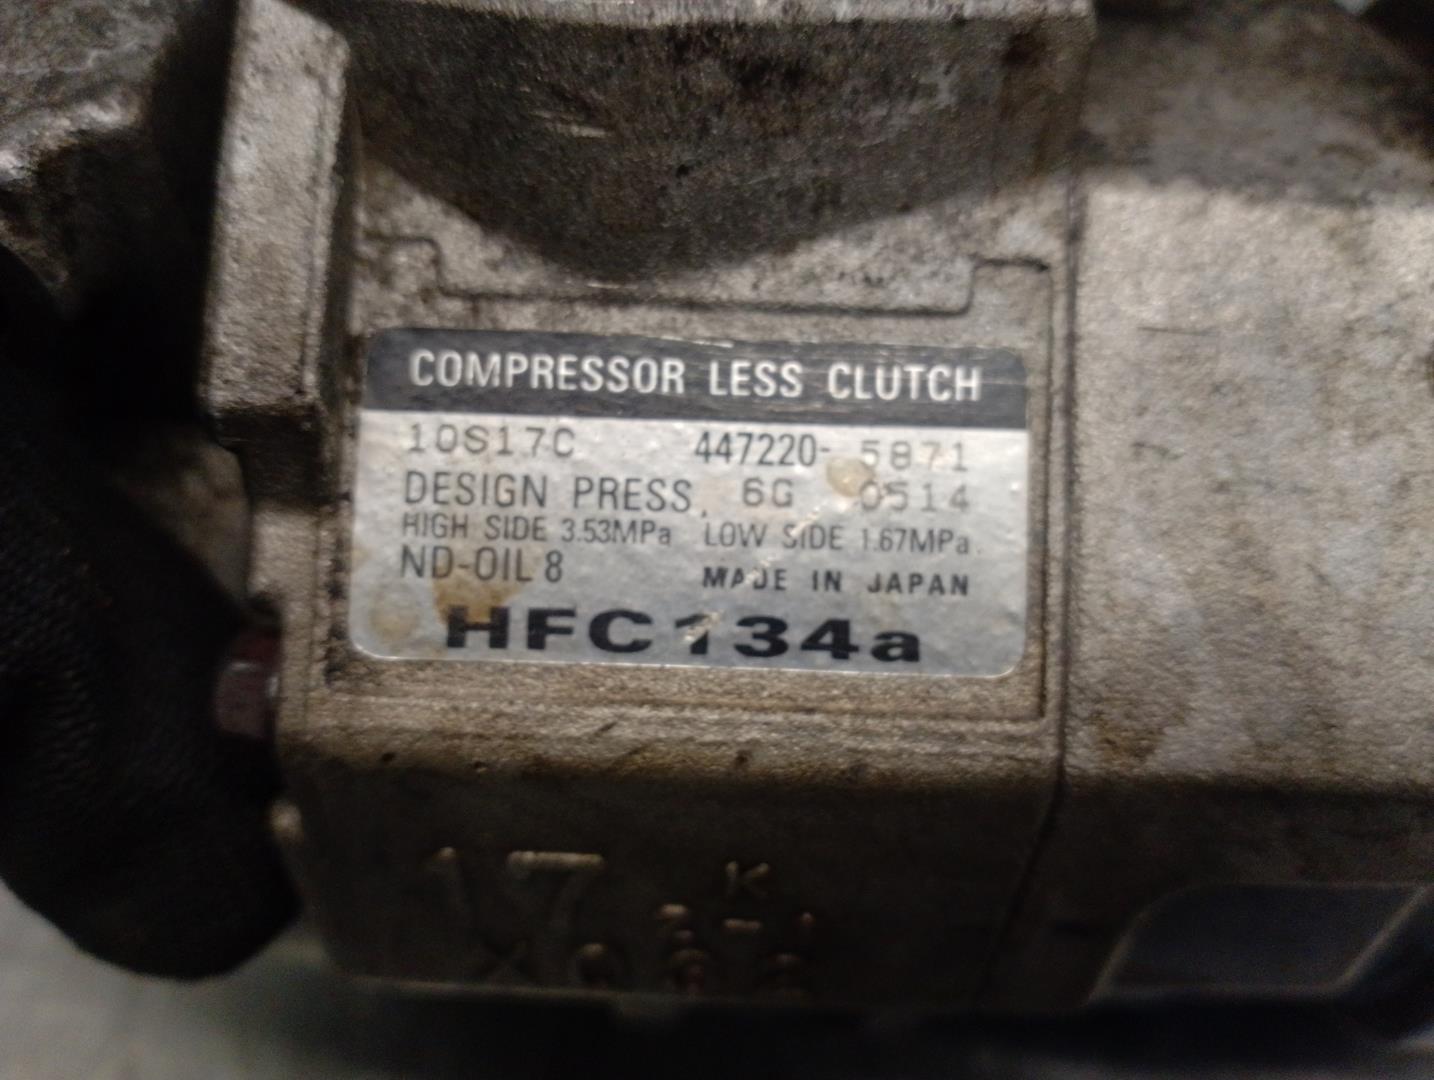 CHRYSLER Sebring 2 generation (2001-2007) Air Condition Pump 4472205871, 10S17C 21722421